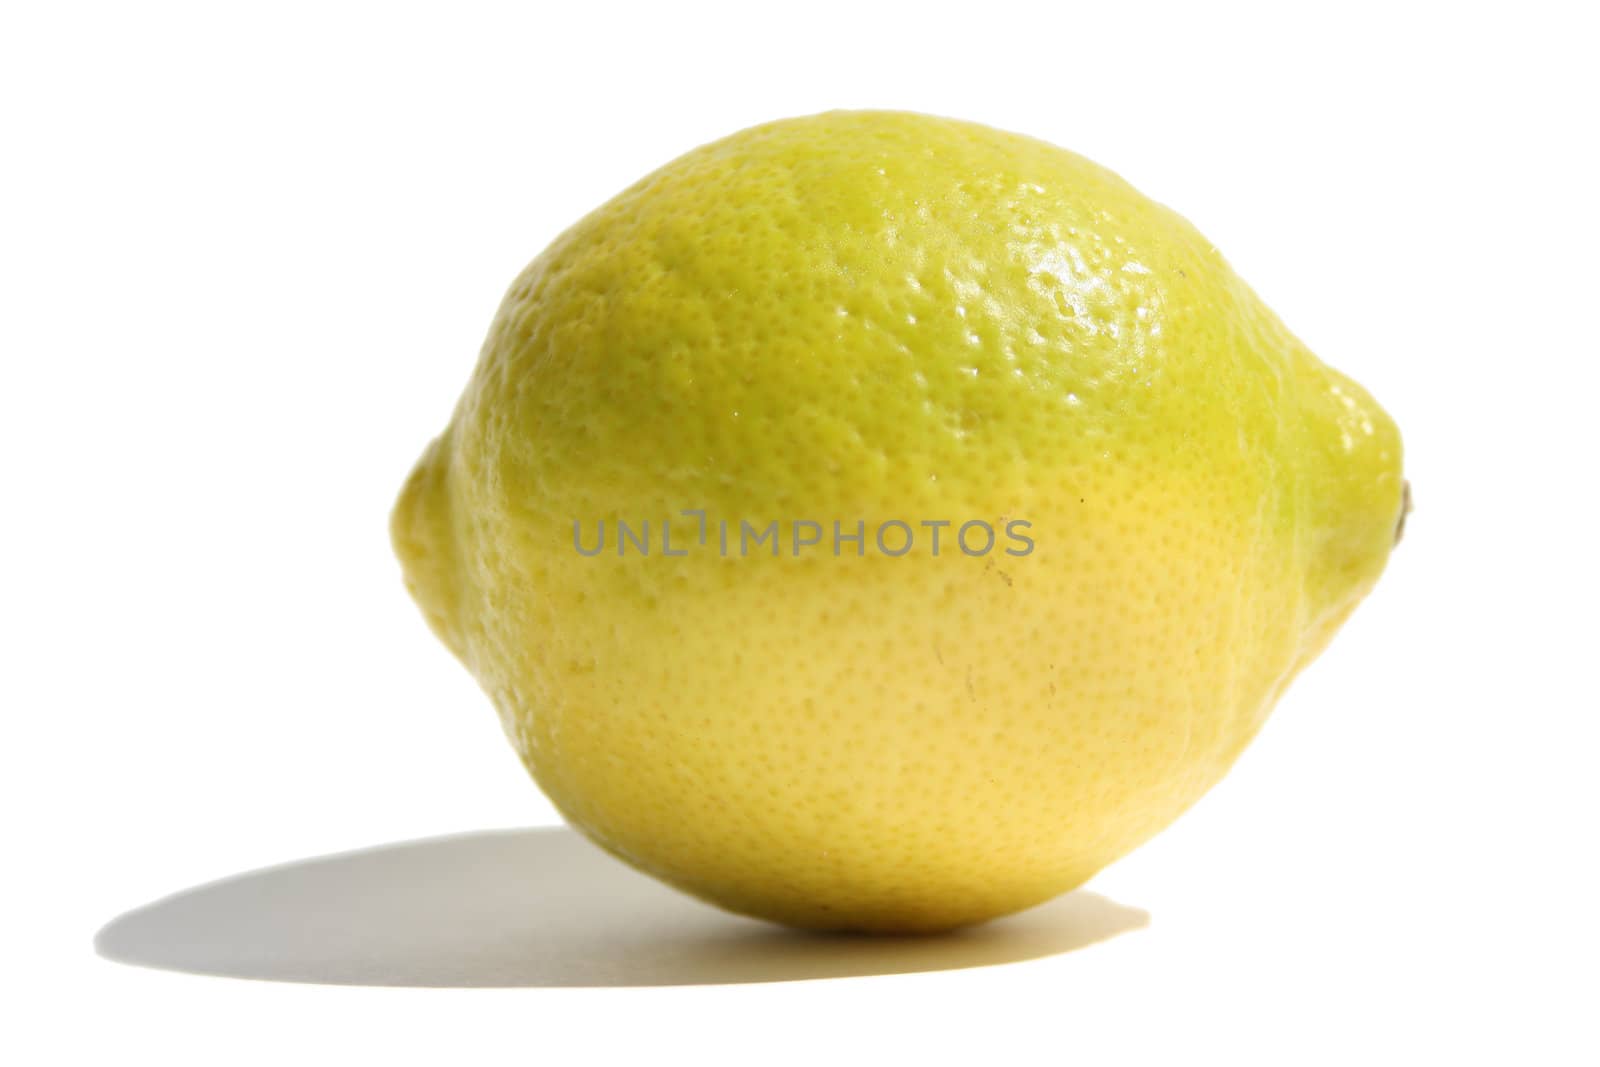 The lemon on a white background.